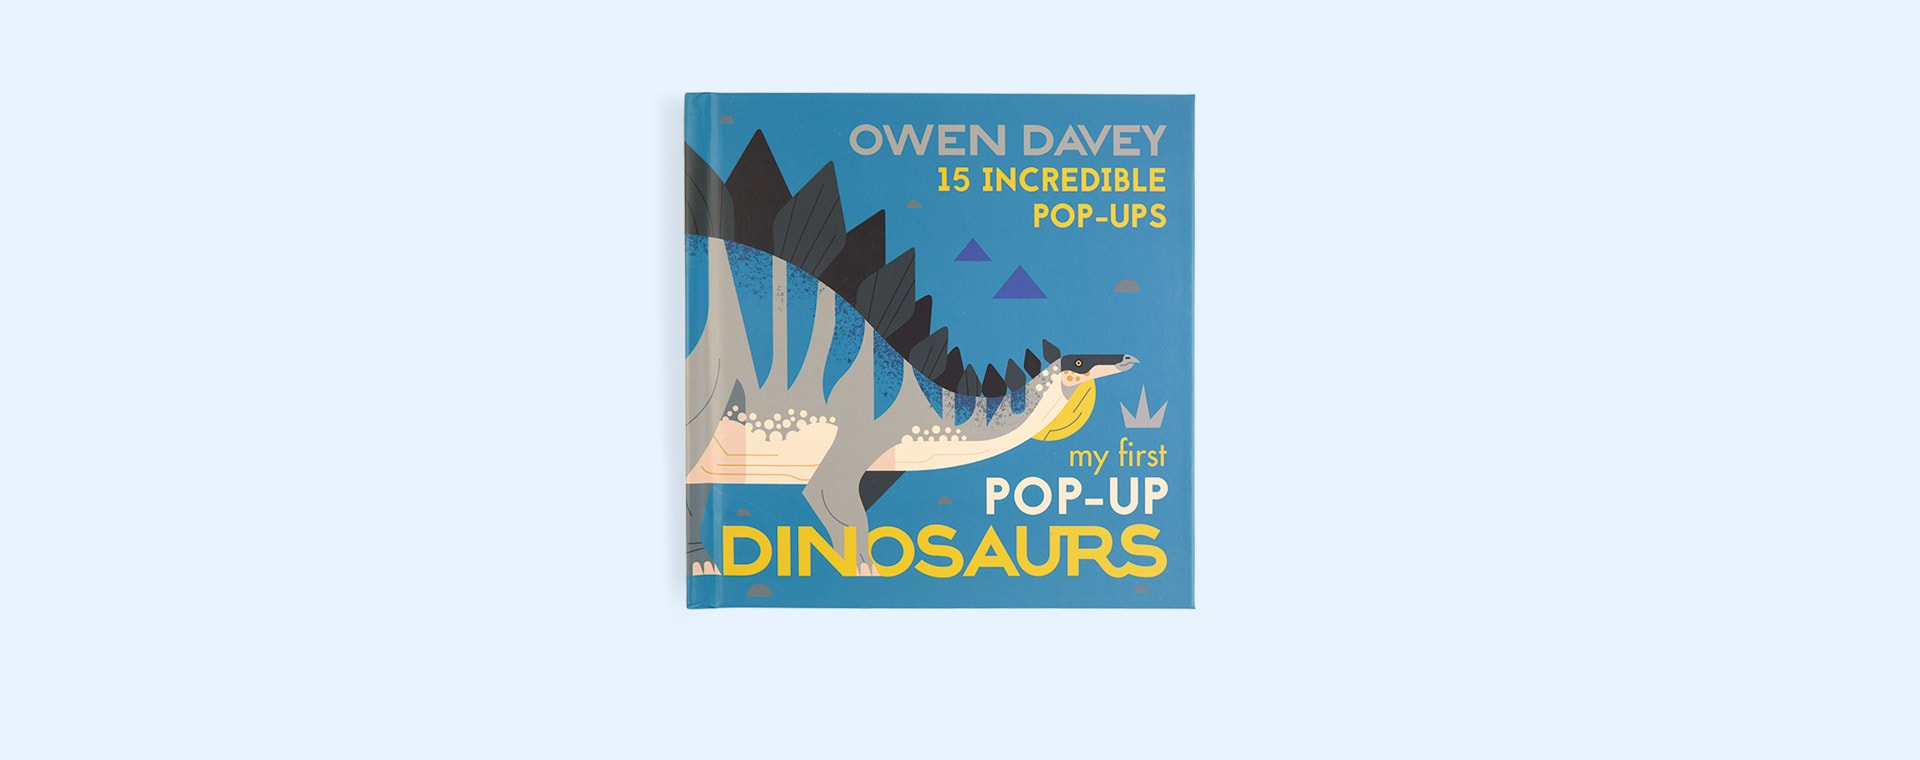 Blue bookspeed My First Pop-Up Dinosaurs: 15 Incredible Pop-Ups